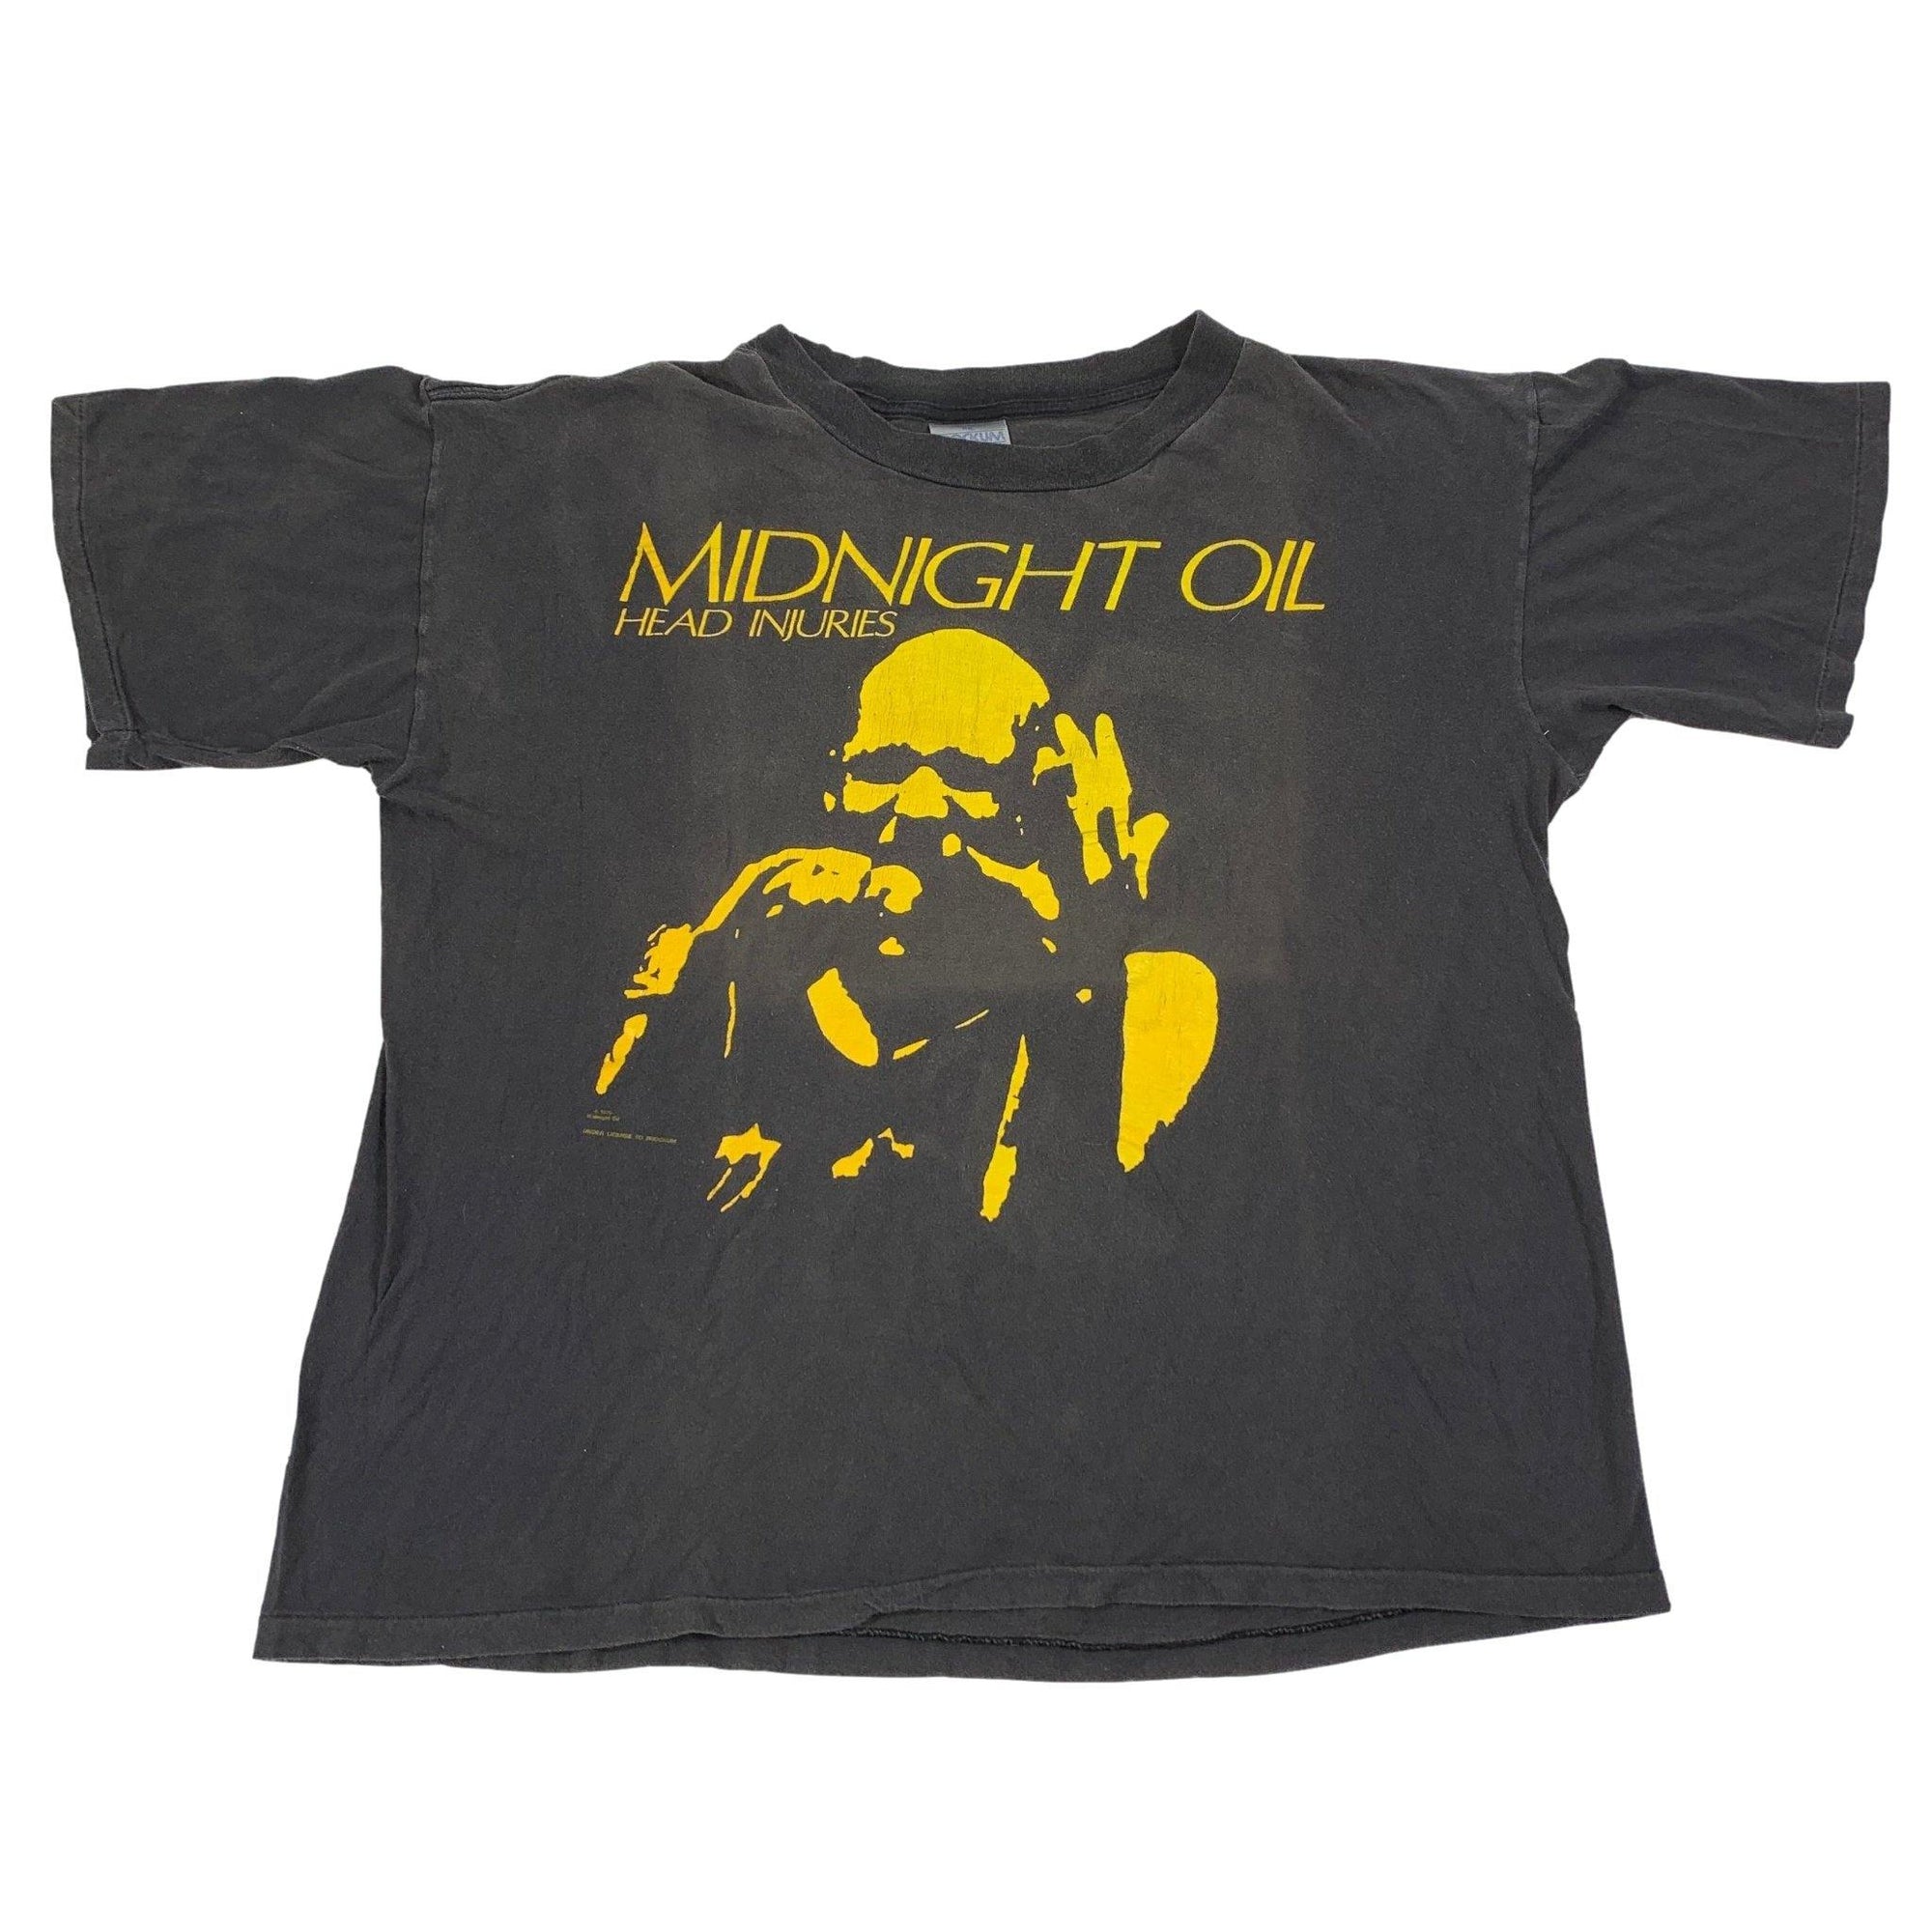 Vintage Midnight Oil "Head Injuries" T-Shirt - jointcustodydc